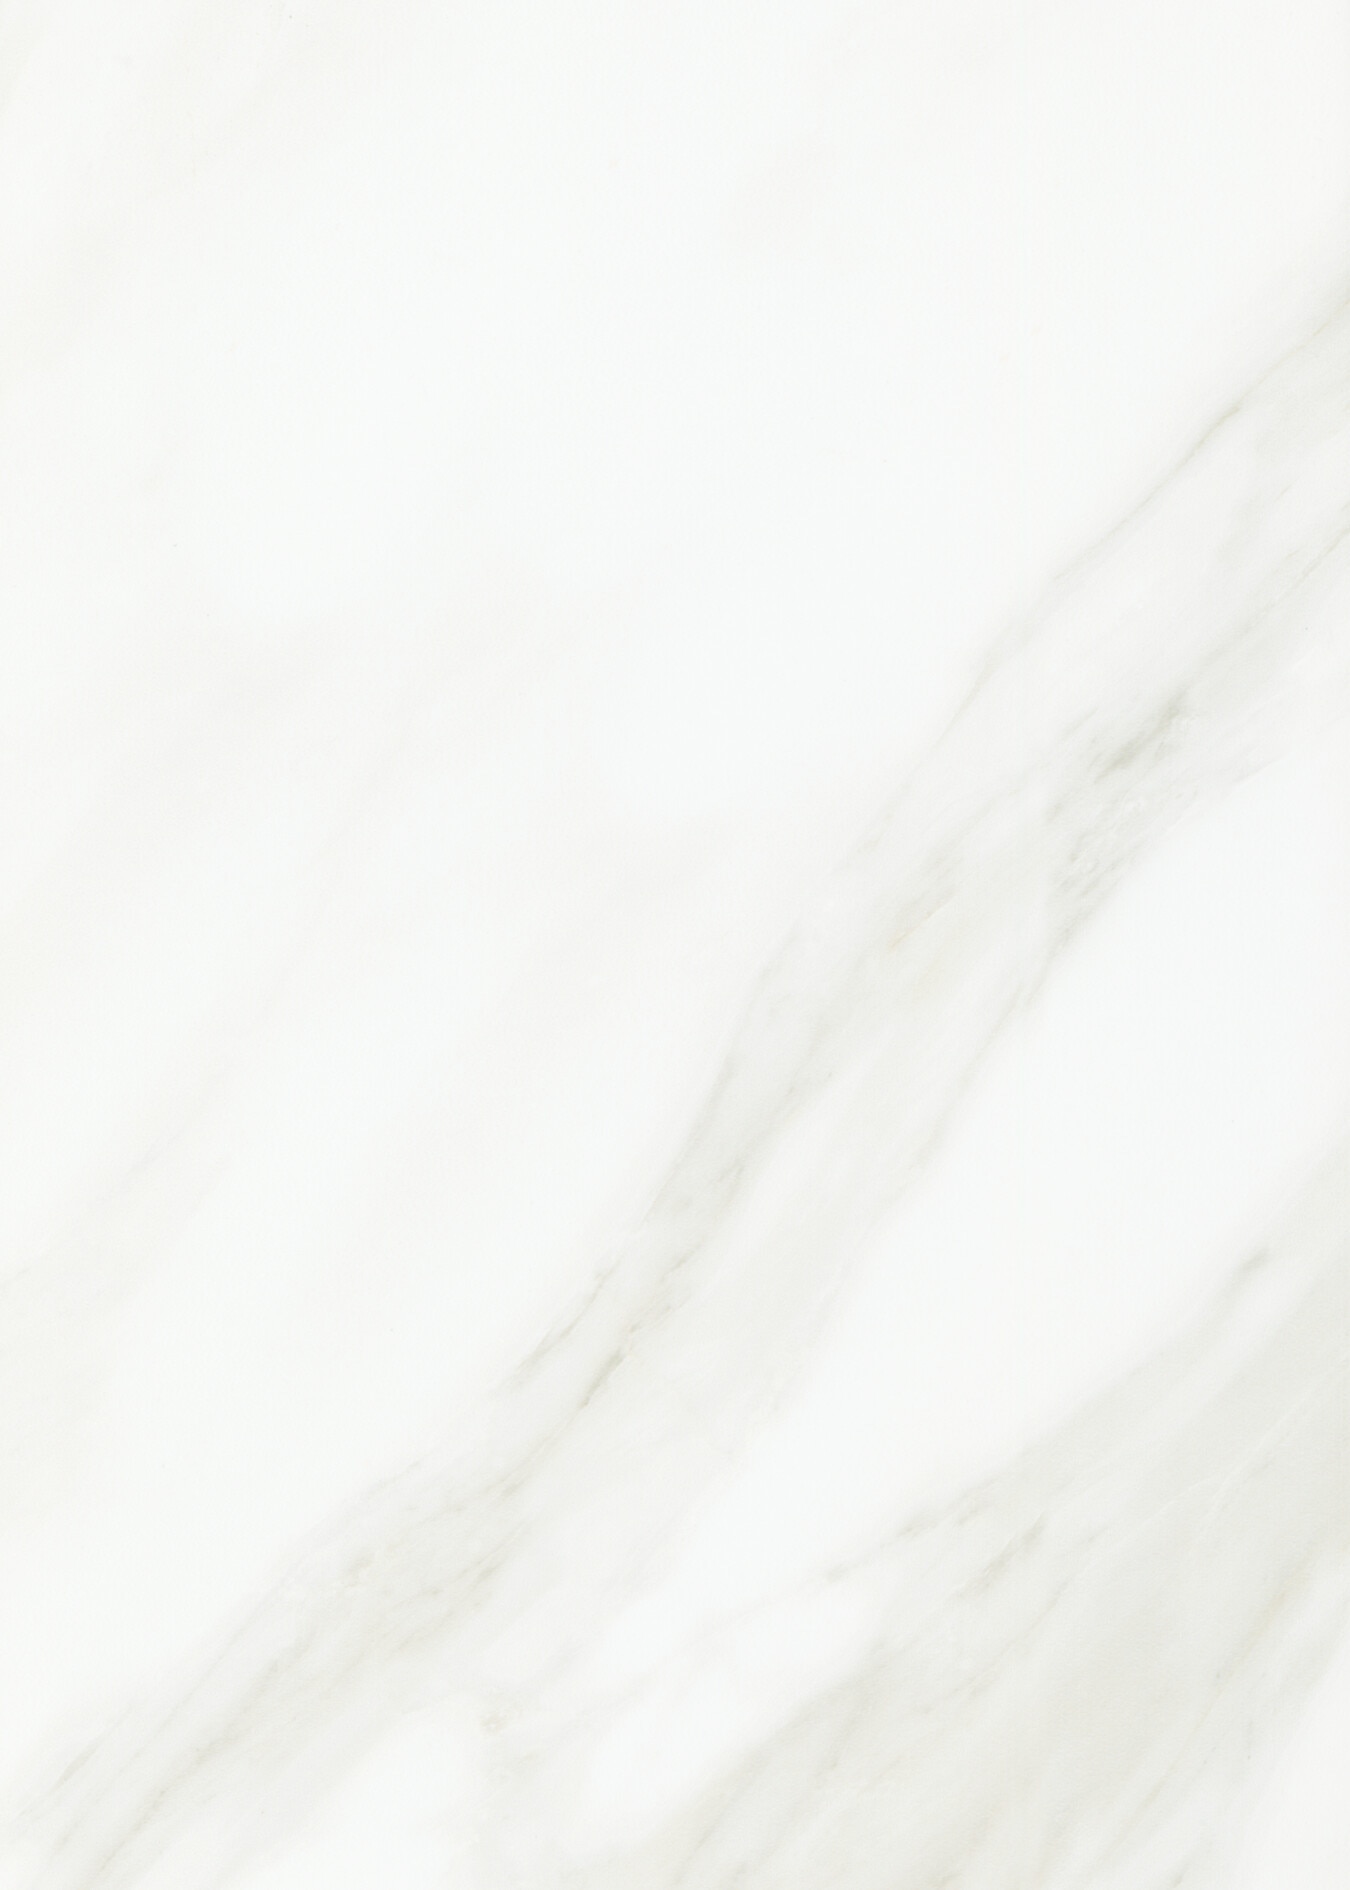 Bianco Carrara, Rectangle, 10X14, Glossy